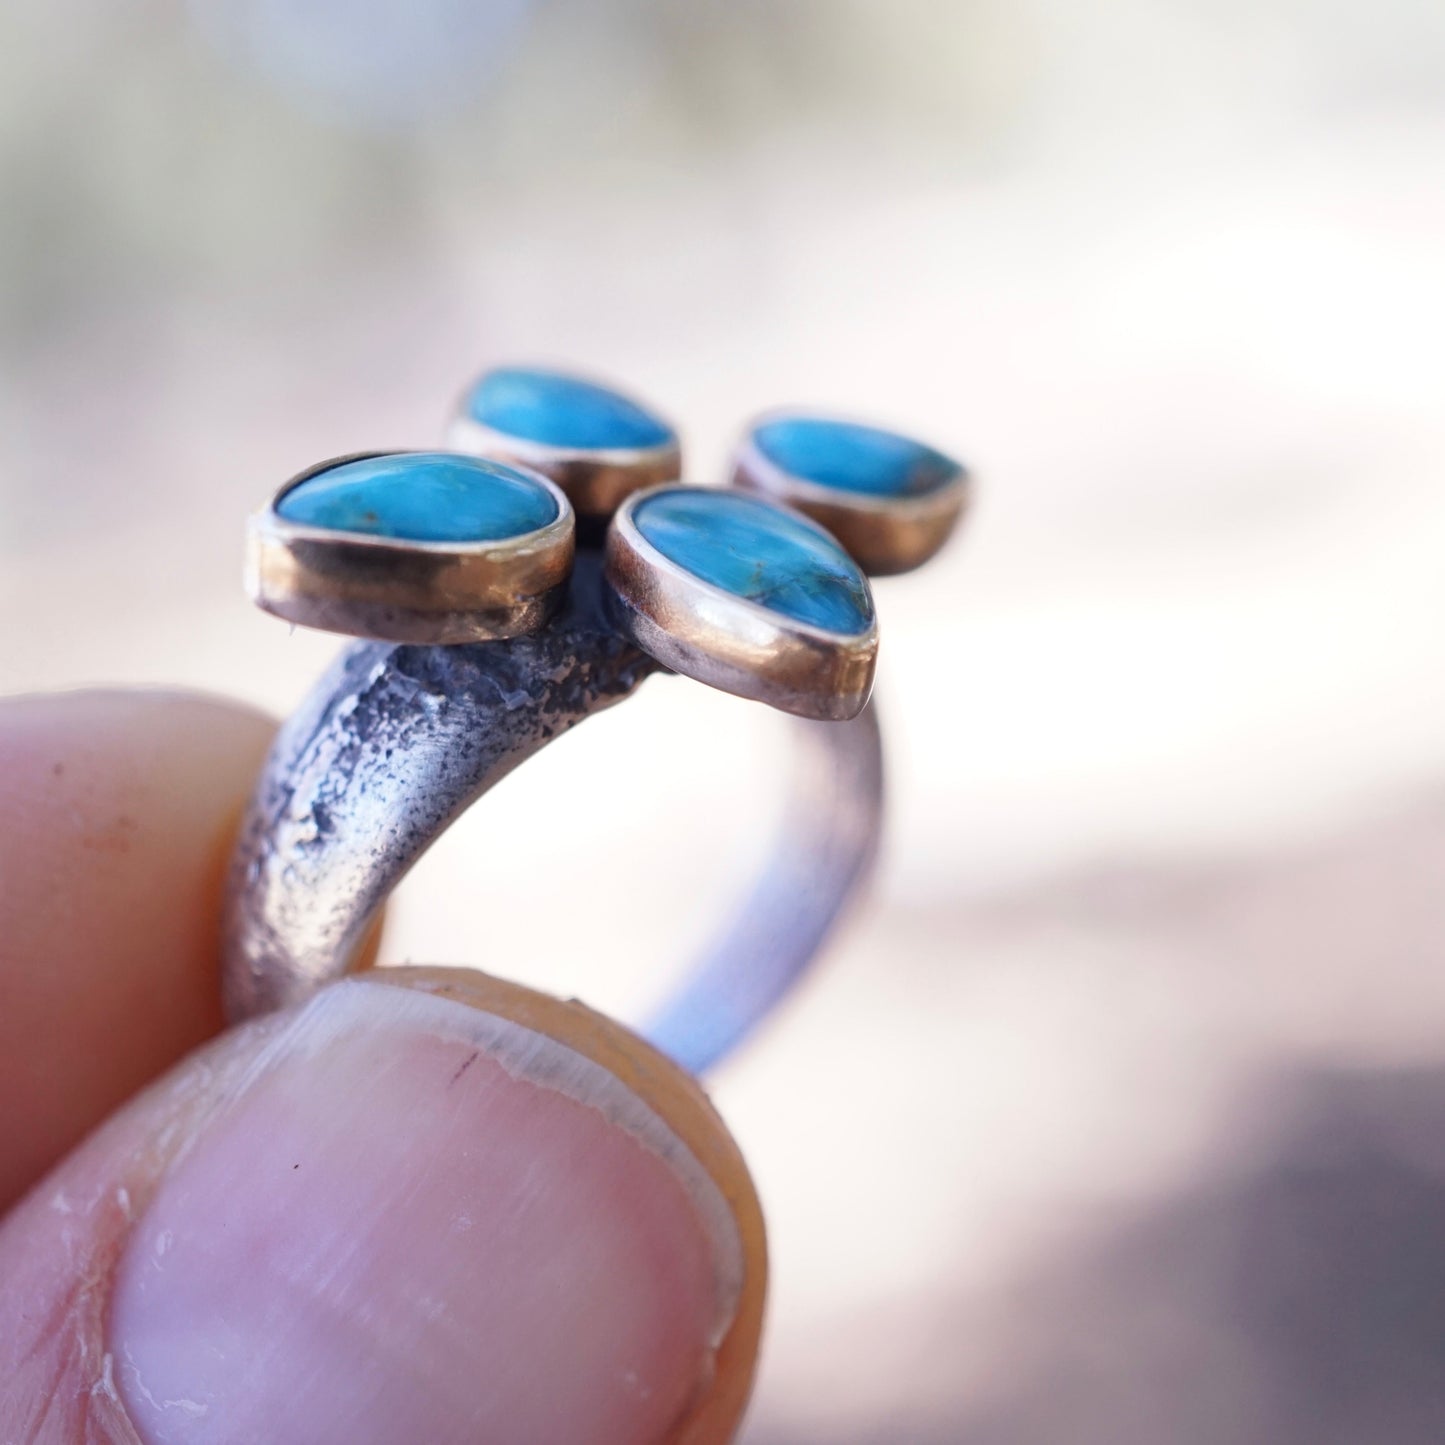 sandcast flower burst ring with blue ridge turquoise and 14k GOLD bezels - size 6 - Lumenrose